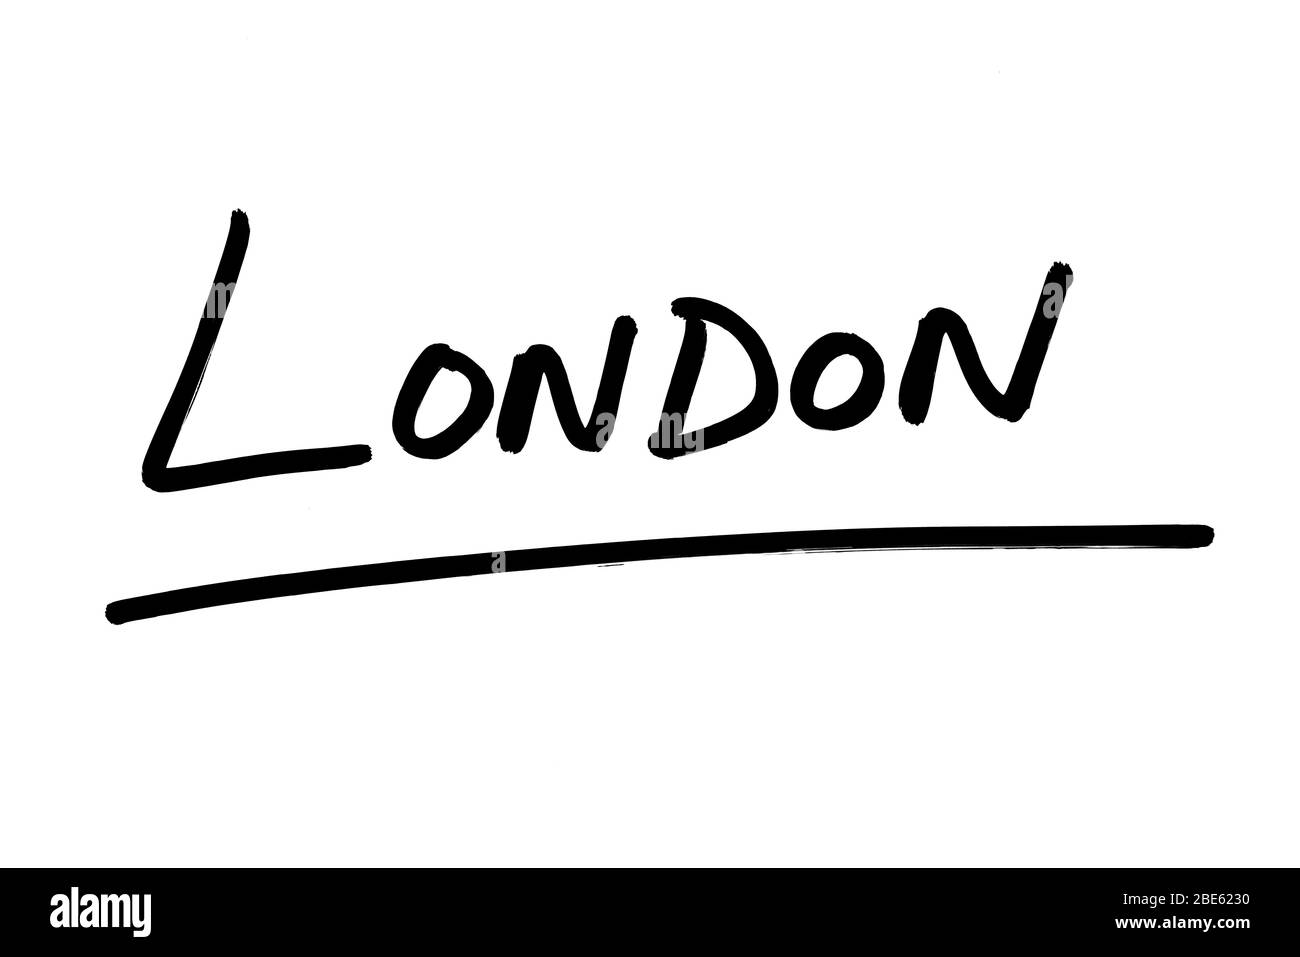 LONDON handwritten on a white background. Stock Photo